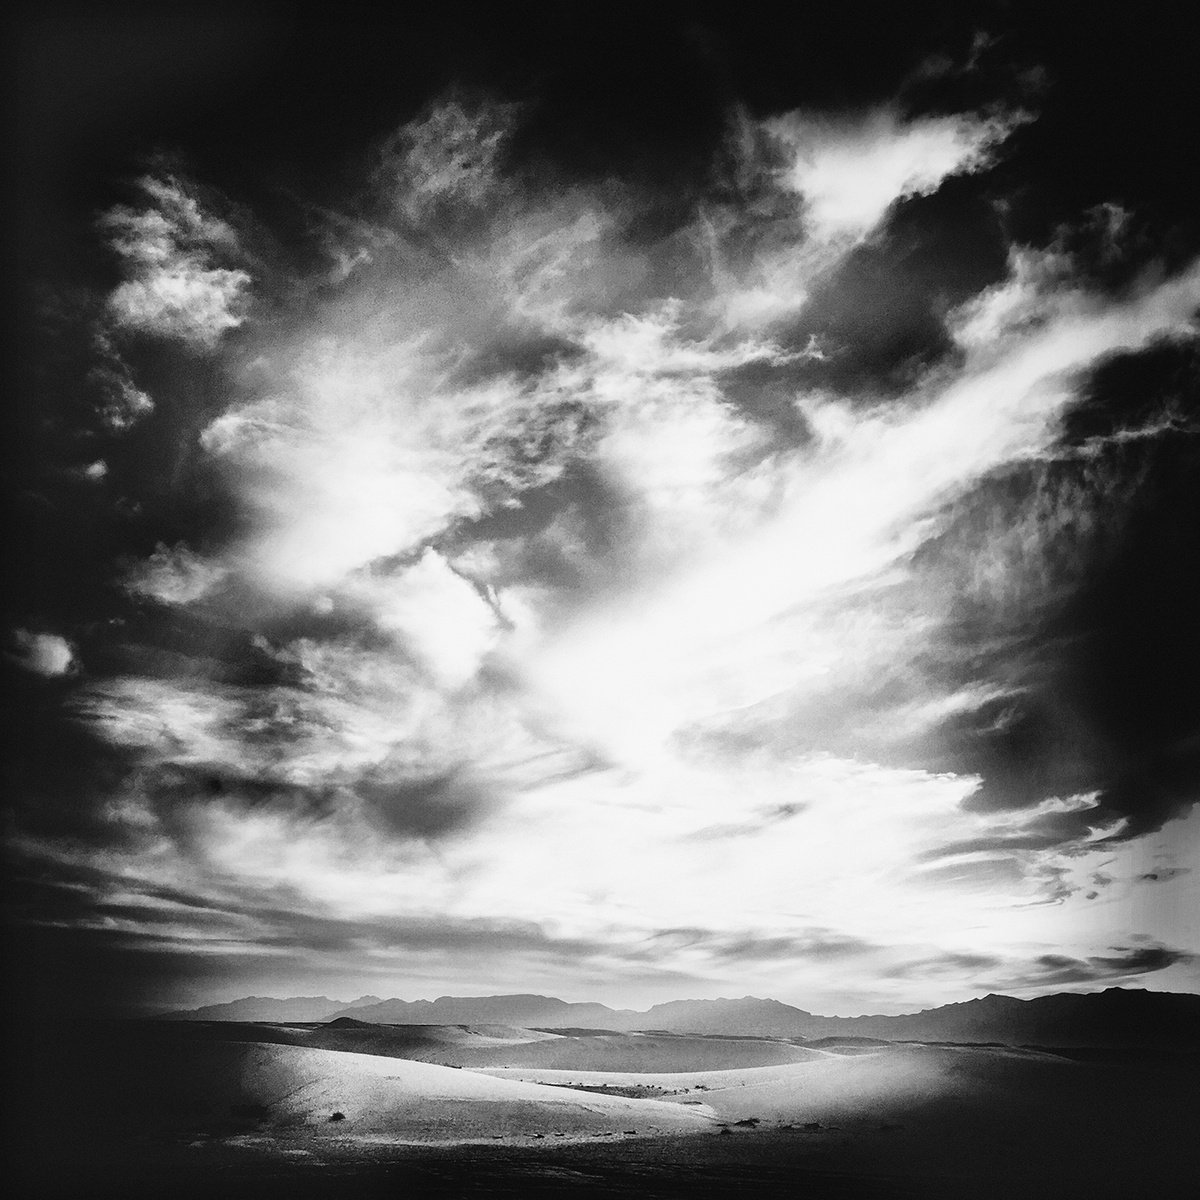 Evening Sky, White Sands, NM by Heike Bohnstengel